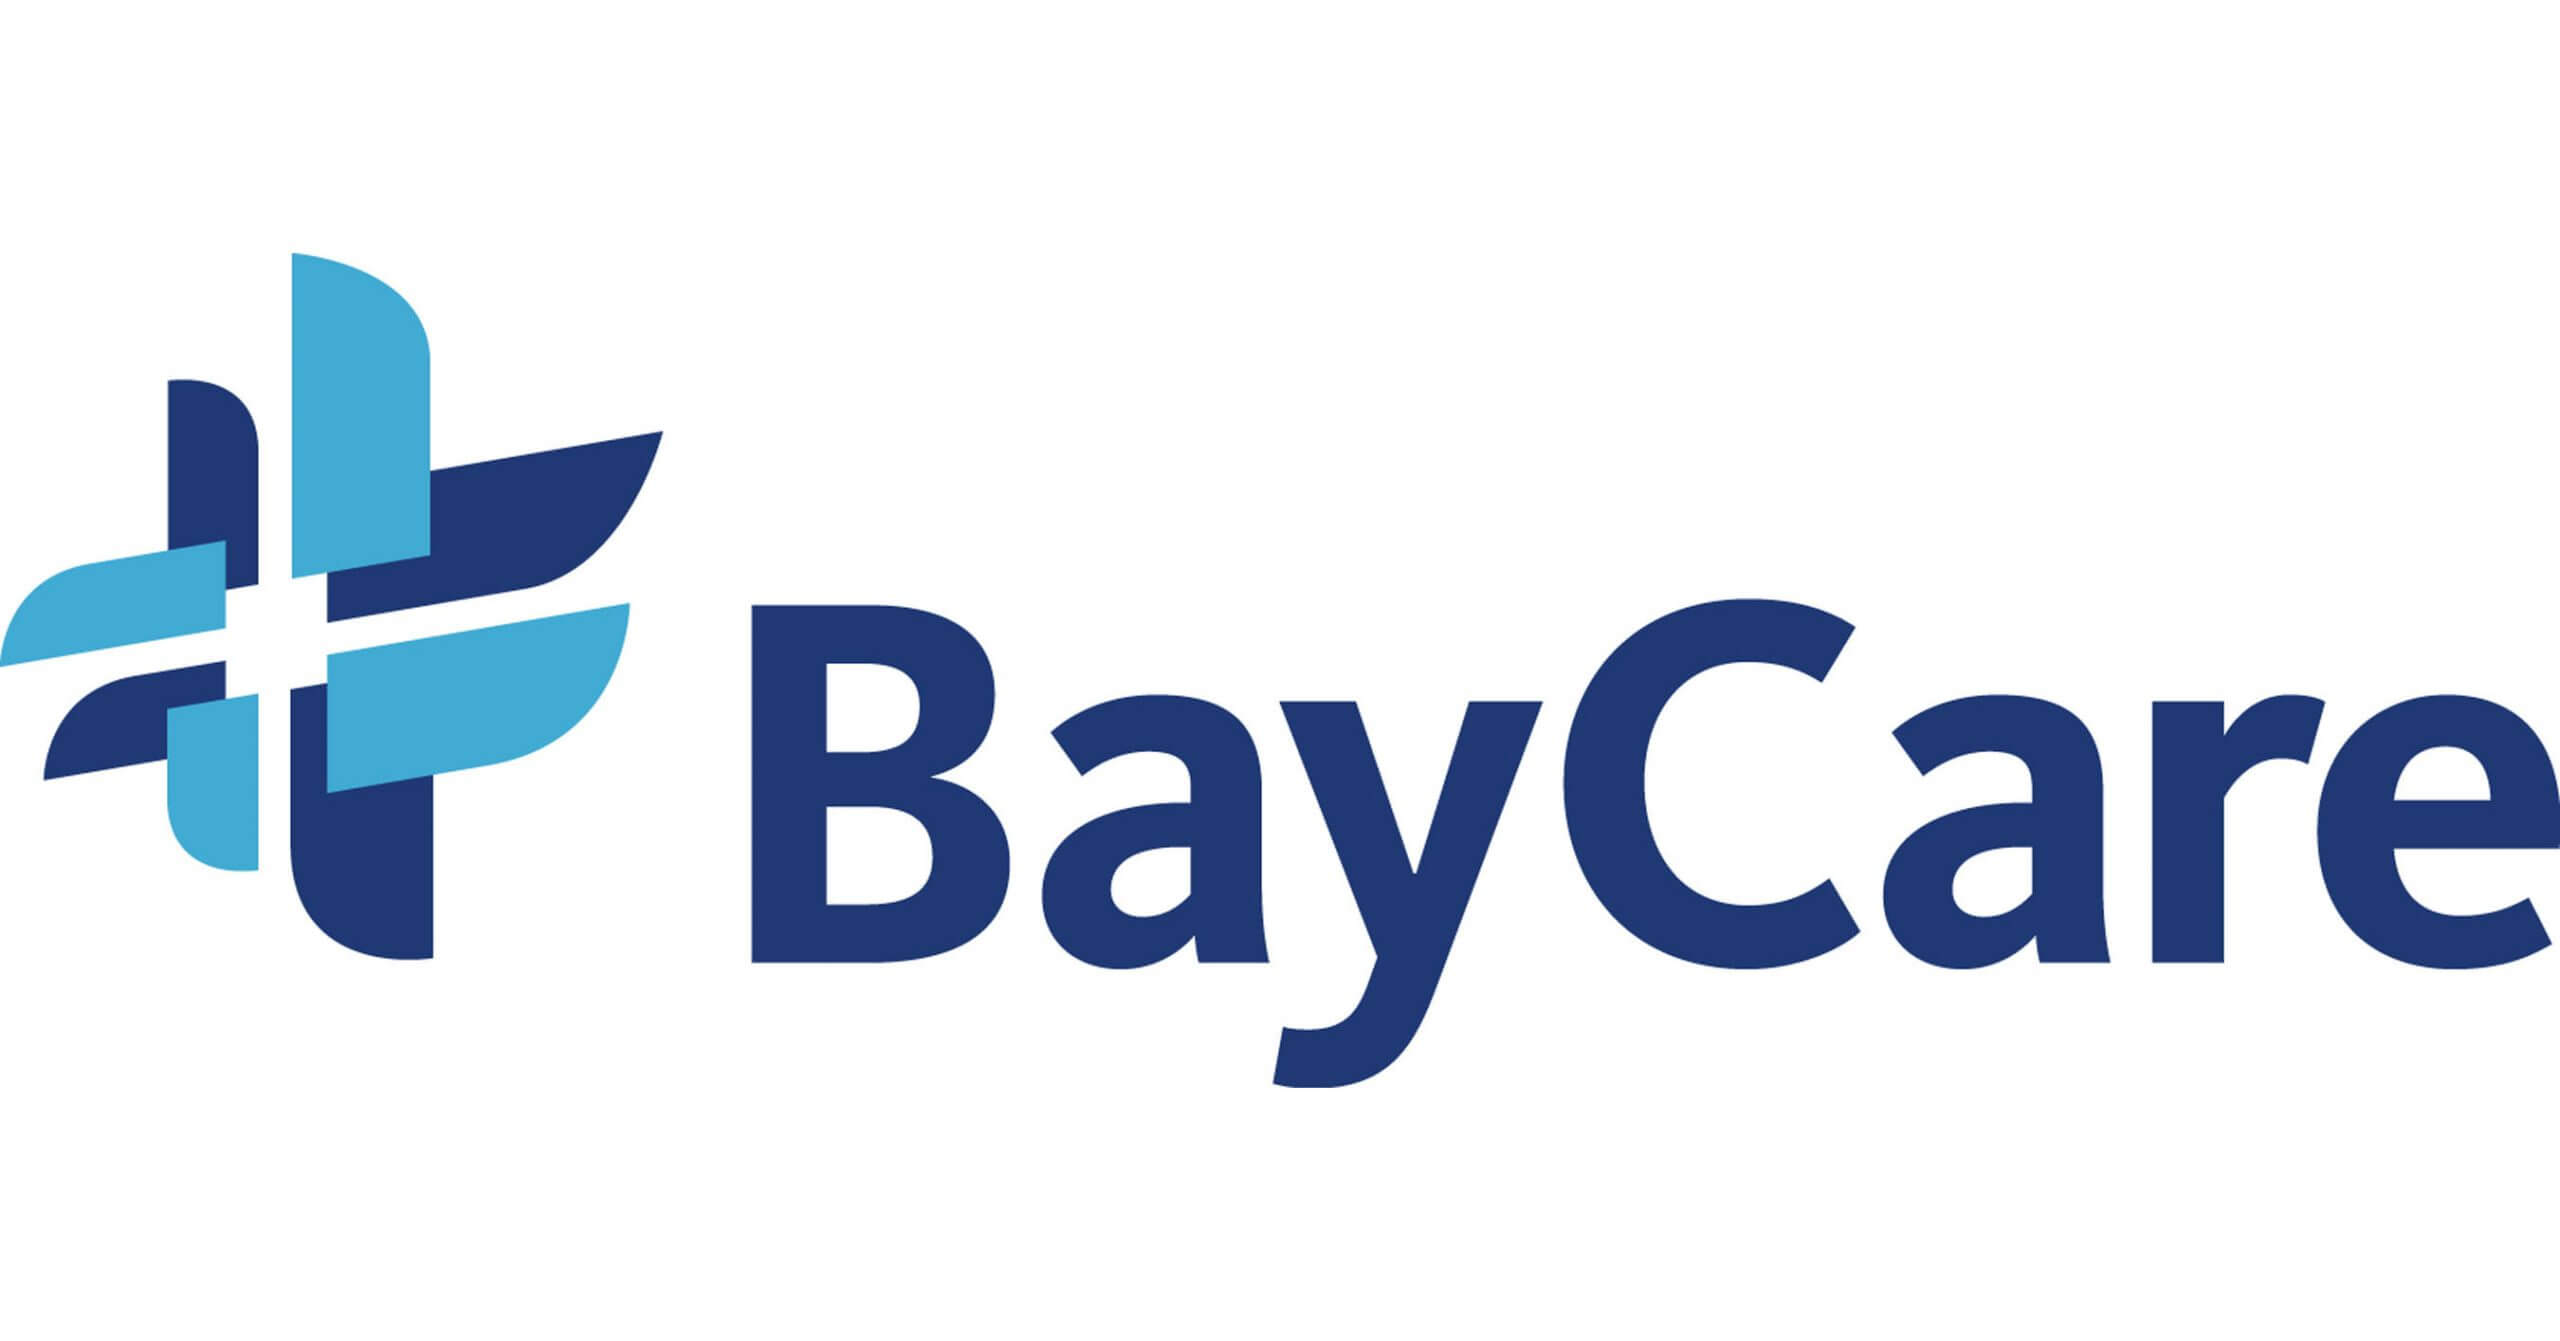 BayCare Mission Statement Analysis